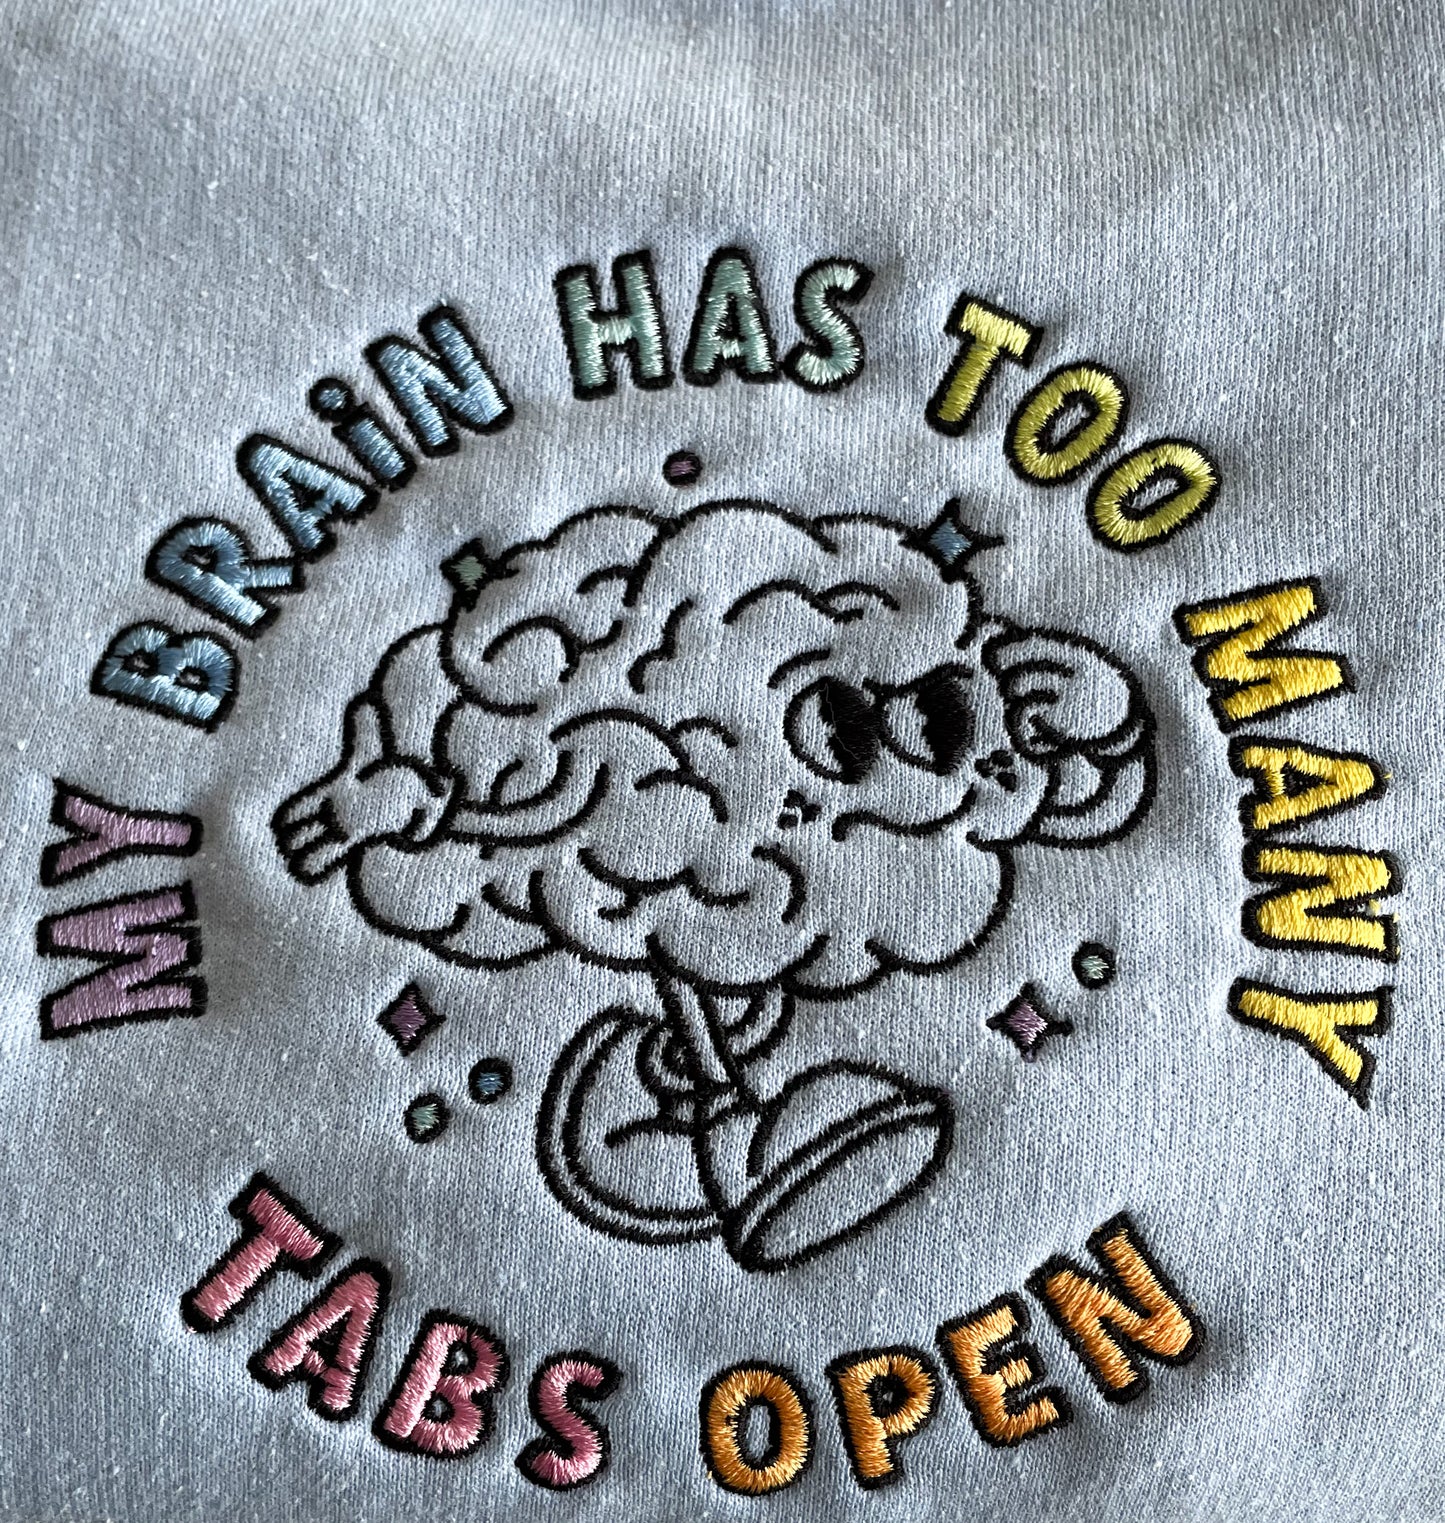 Brain has too many tabs open